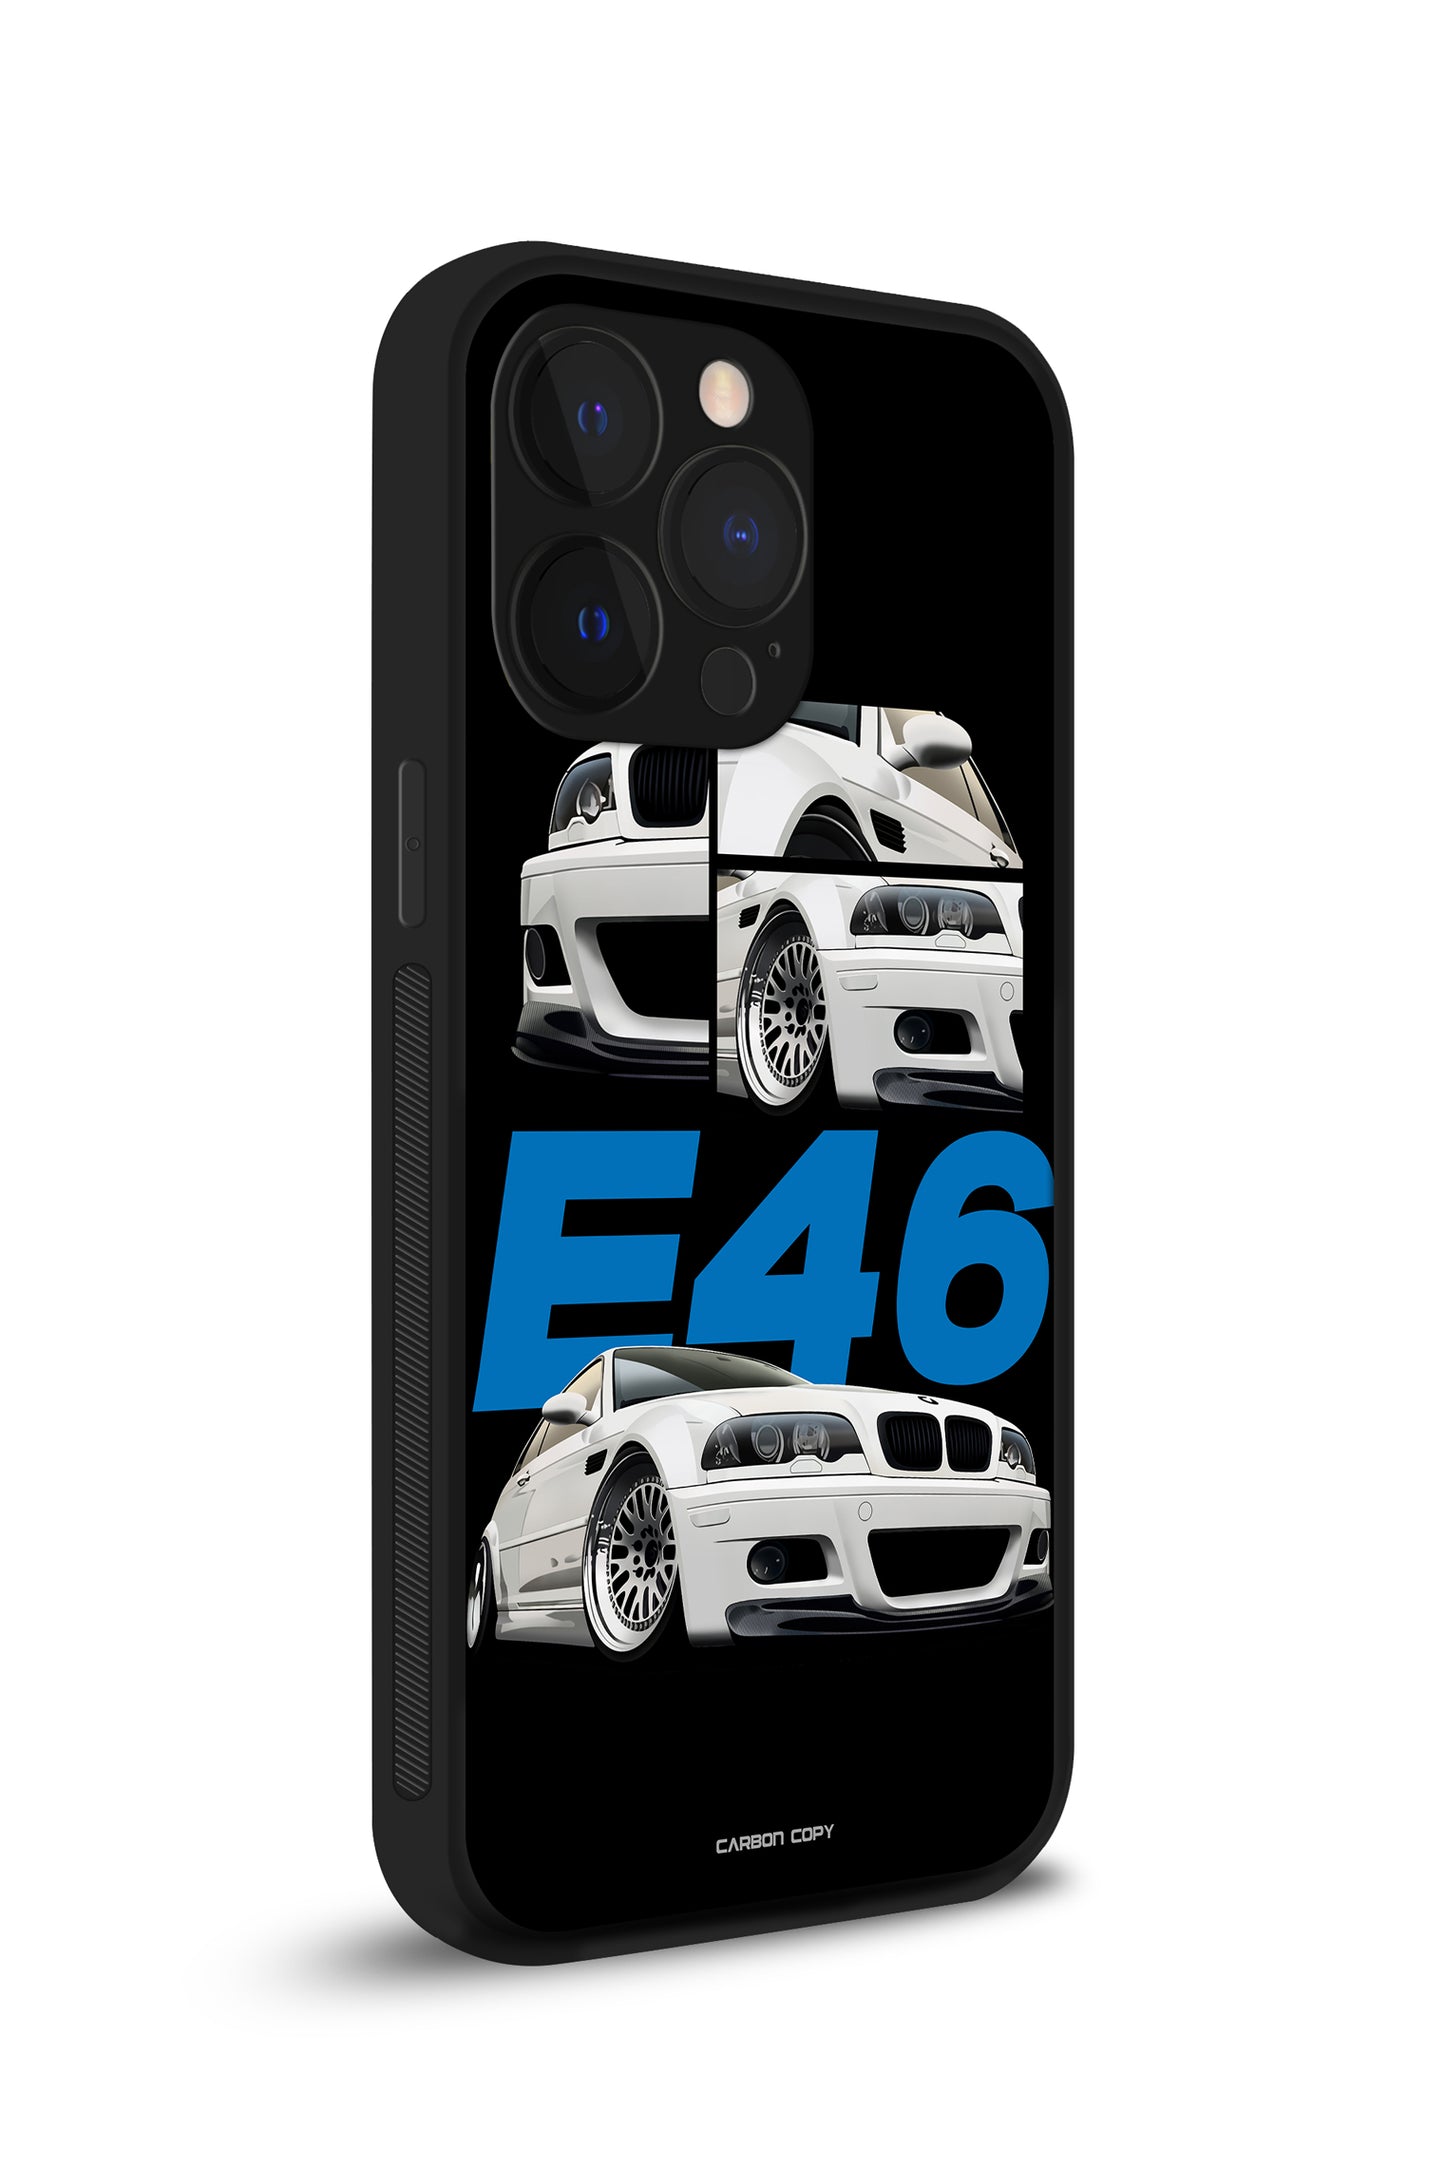 BMW E46 Nurburgring Premium Phone Glass Case